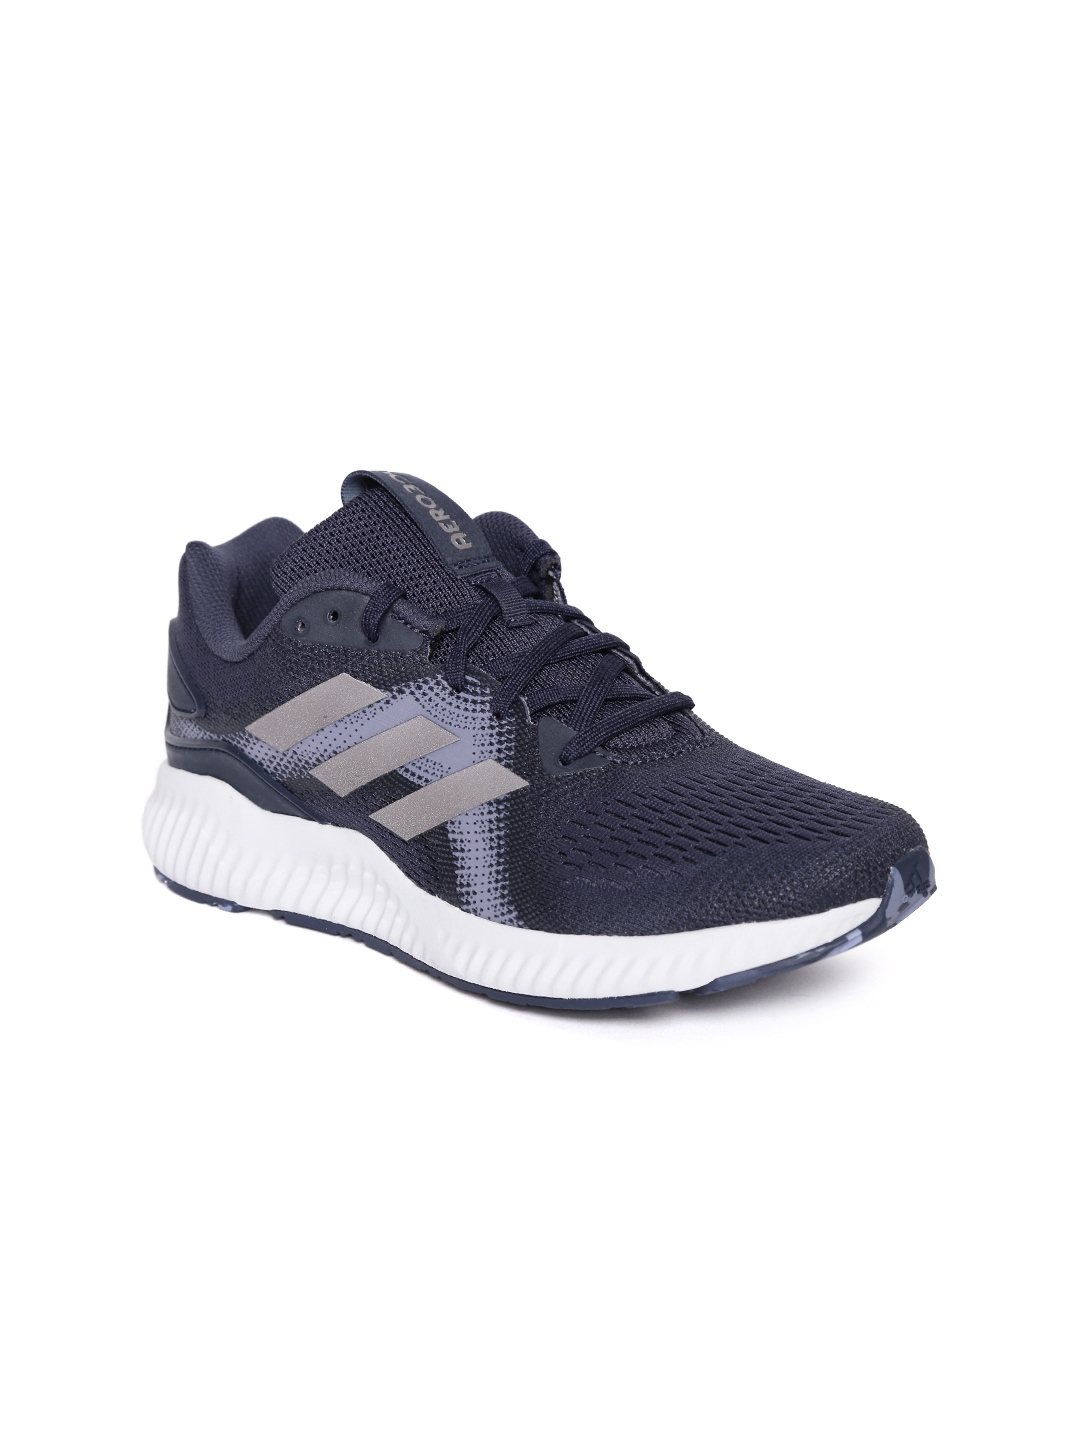 Buy ADIDAS Women Navy Blue Aerobounce ST Running Shoes - Sports Shoes ...